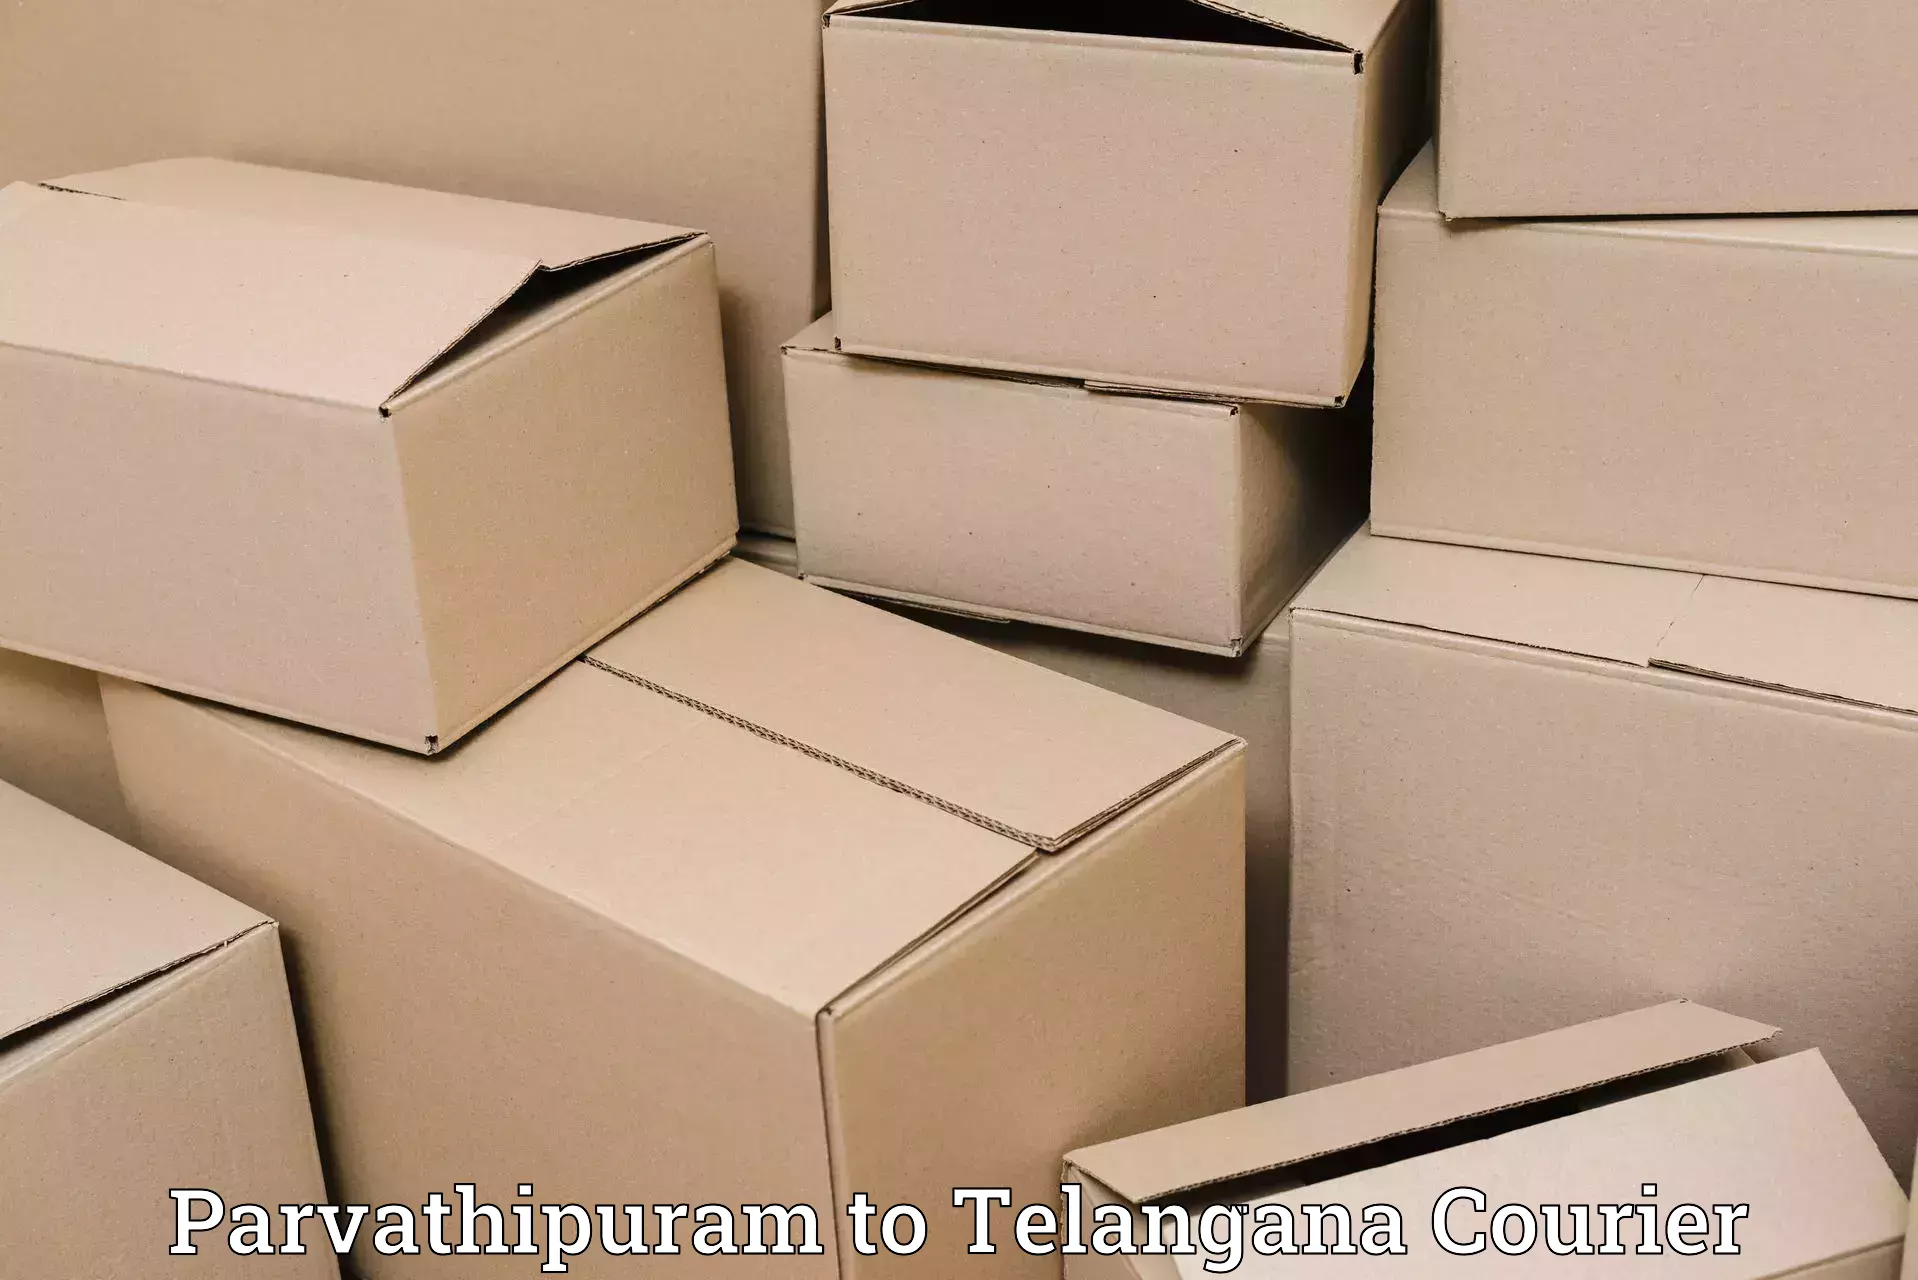 Express delivery capabilities Parvathipuram to Sikanderguda